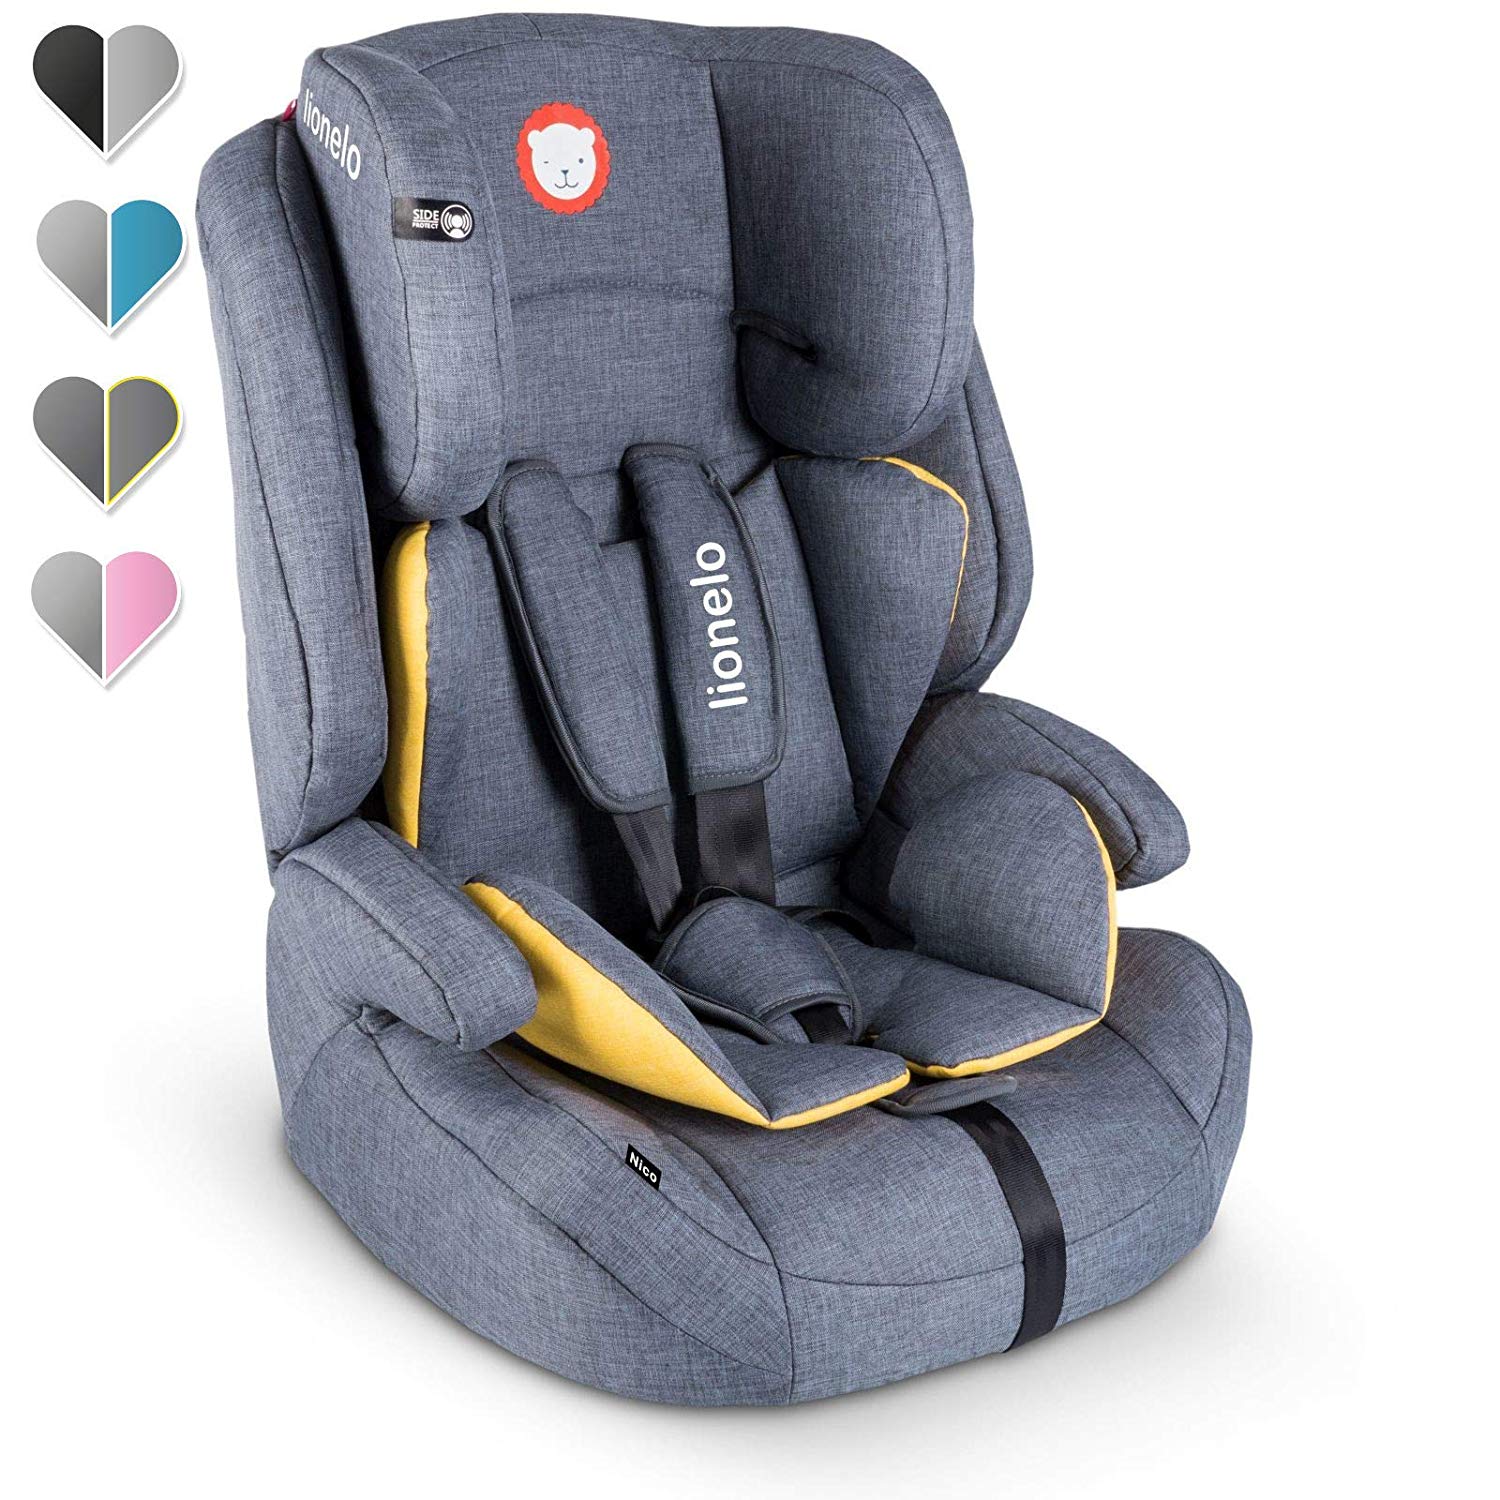 Lionelo Nico Child Car Seat, Group 1, 2, 3, 9-36 kg, Side Protection, 5-Point Seat Belt, Removable Backrest, Adjustable Headrest, ECE R44 04 yellow